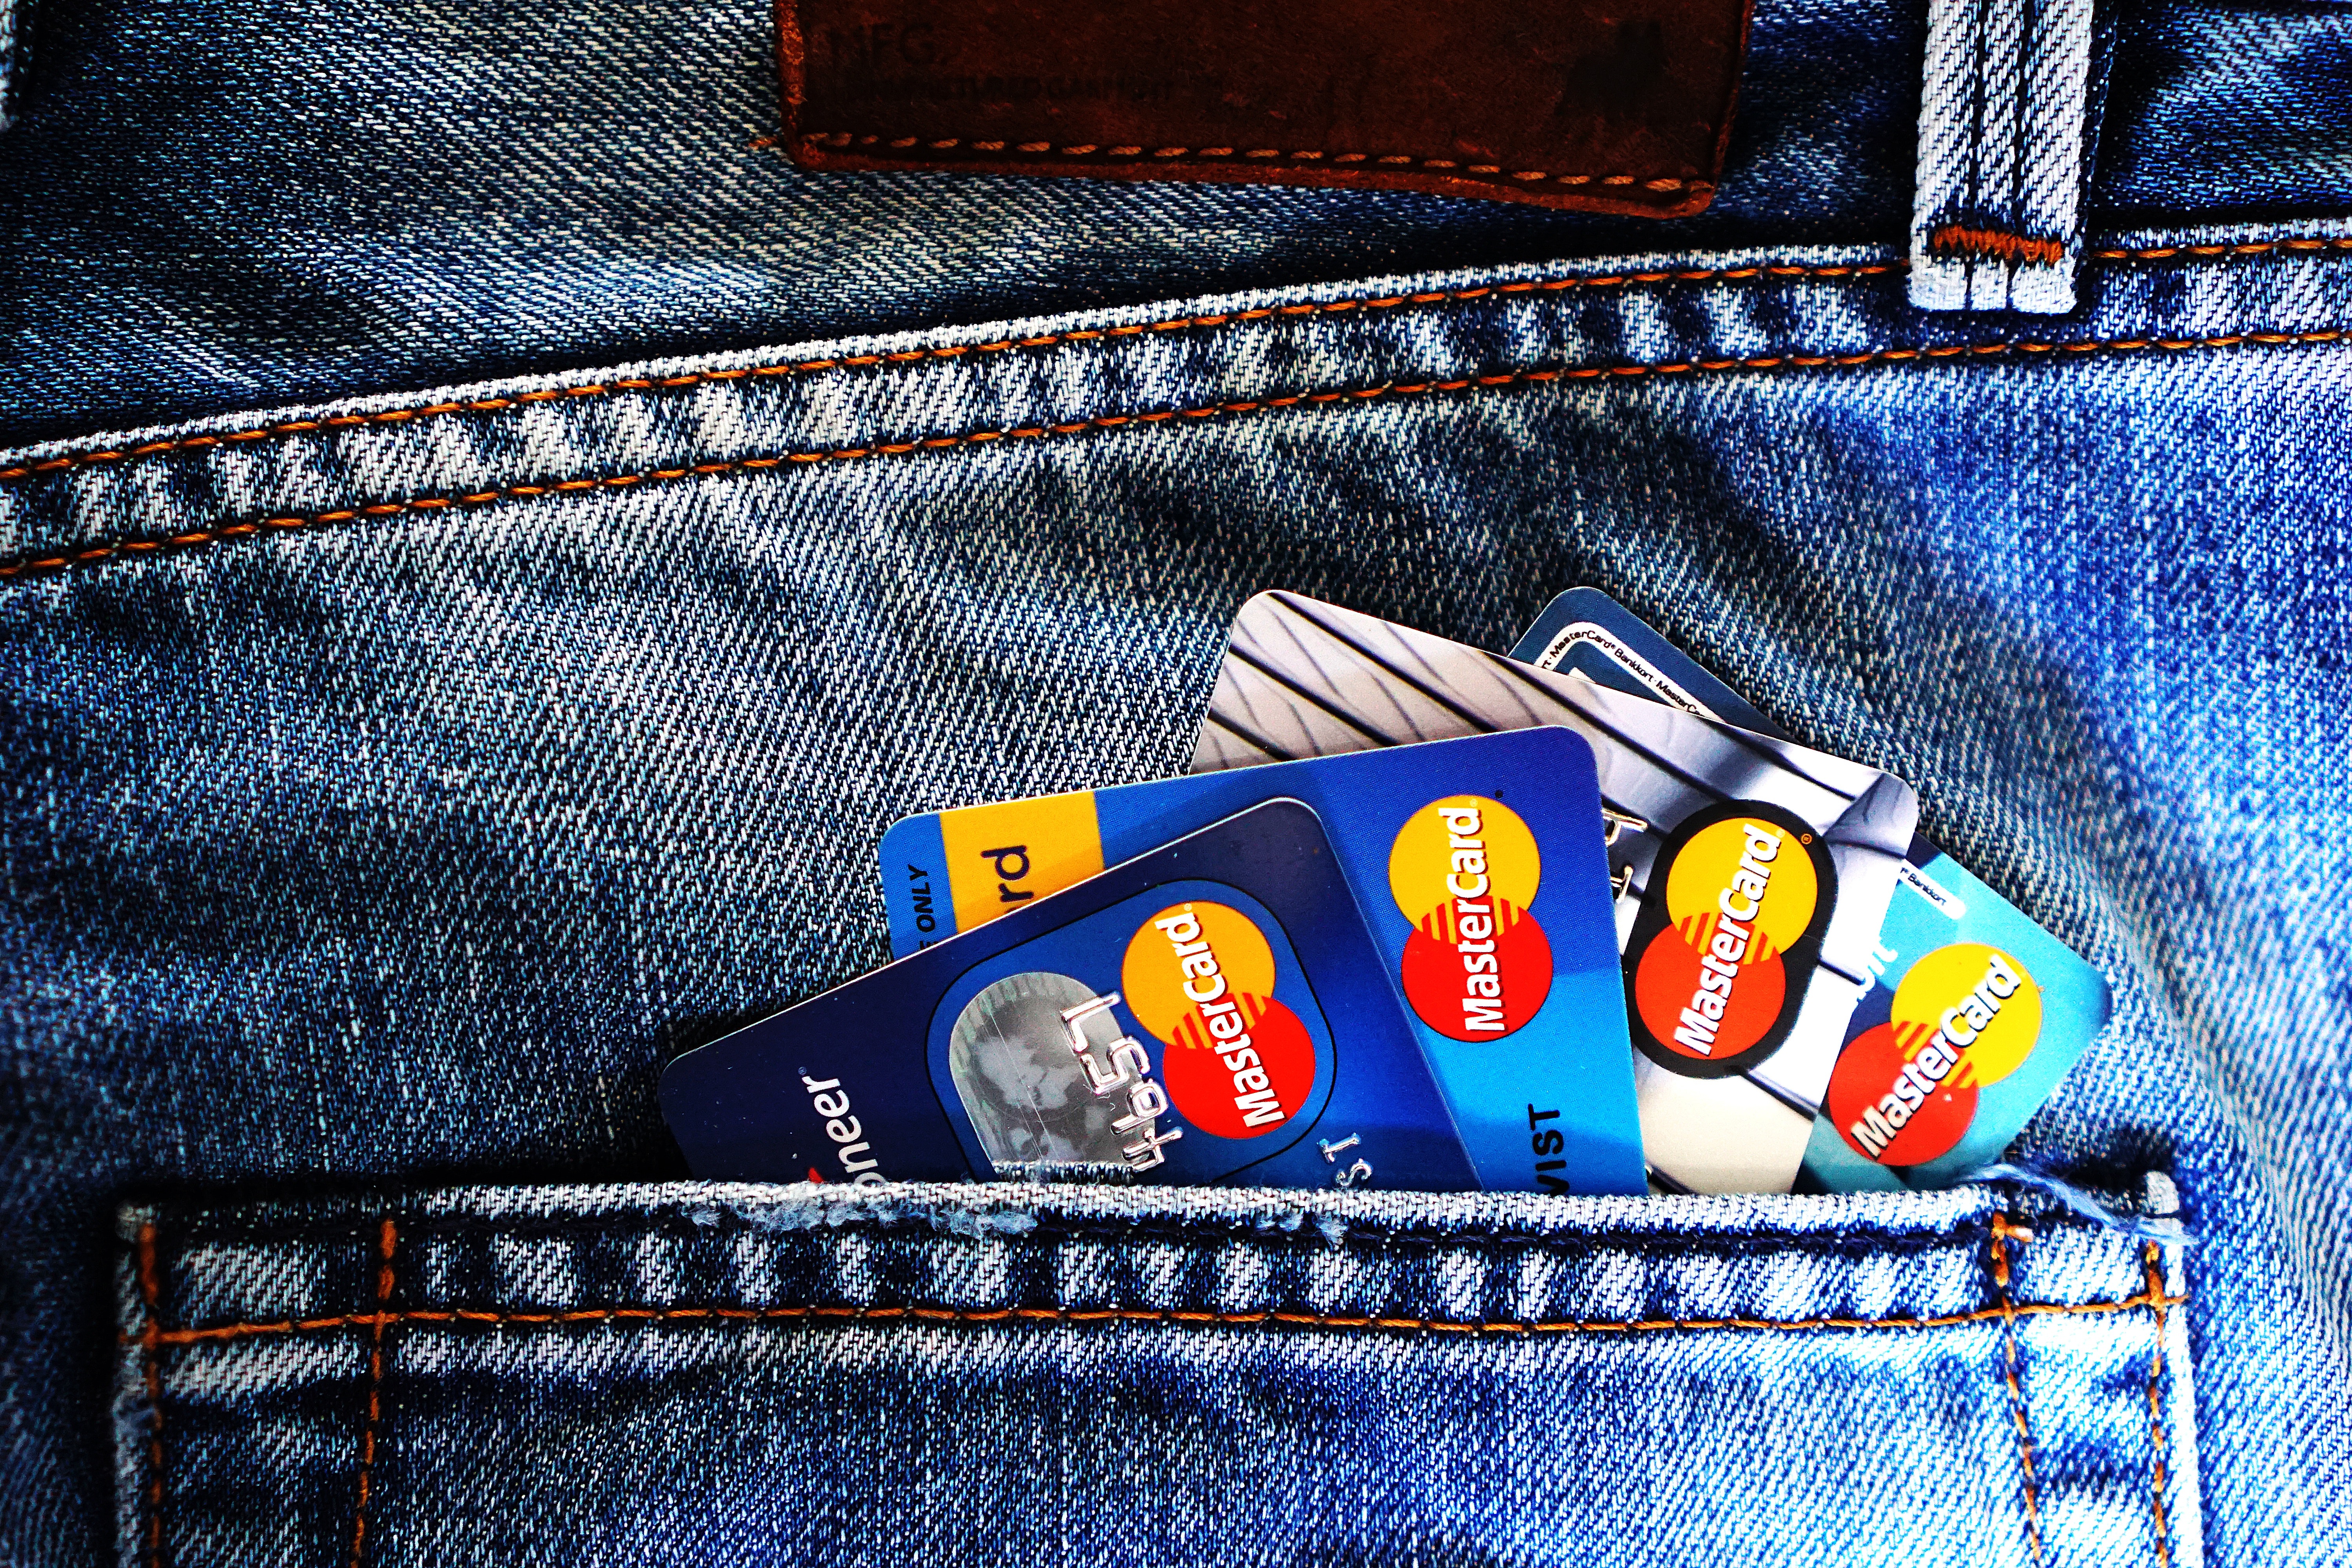 Credit cards arranged in a fan design in a back pocket of some denim jeans